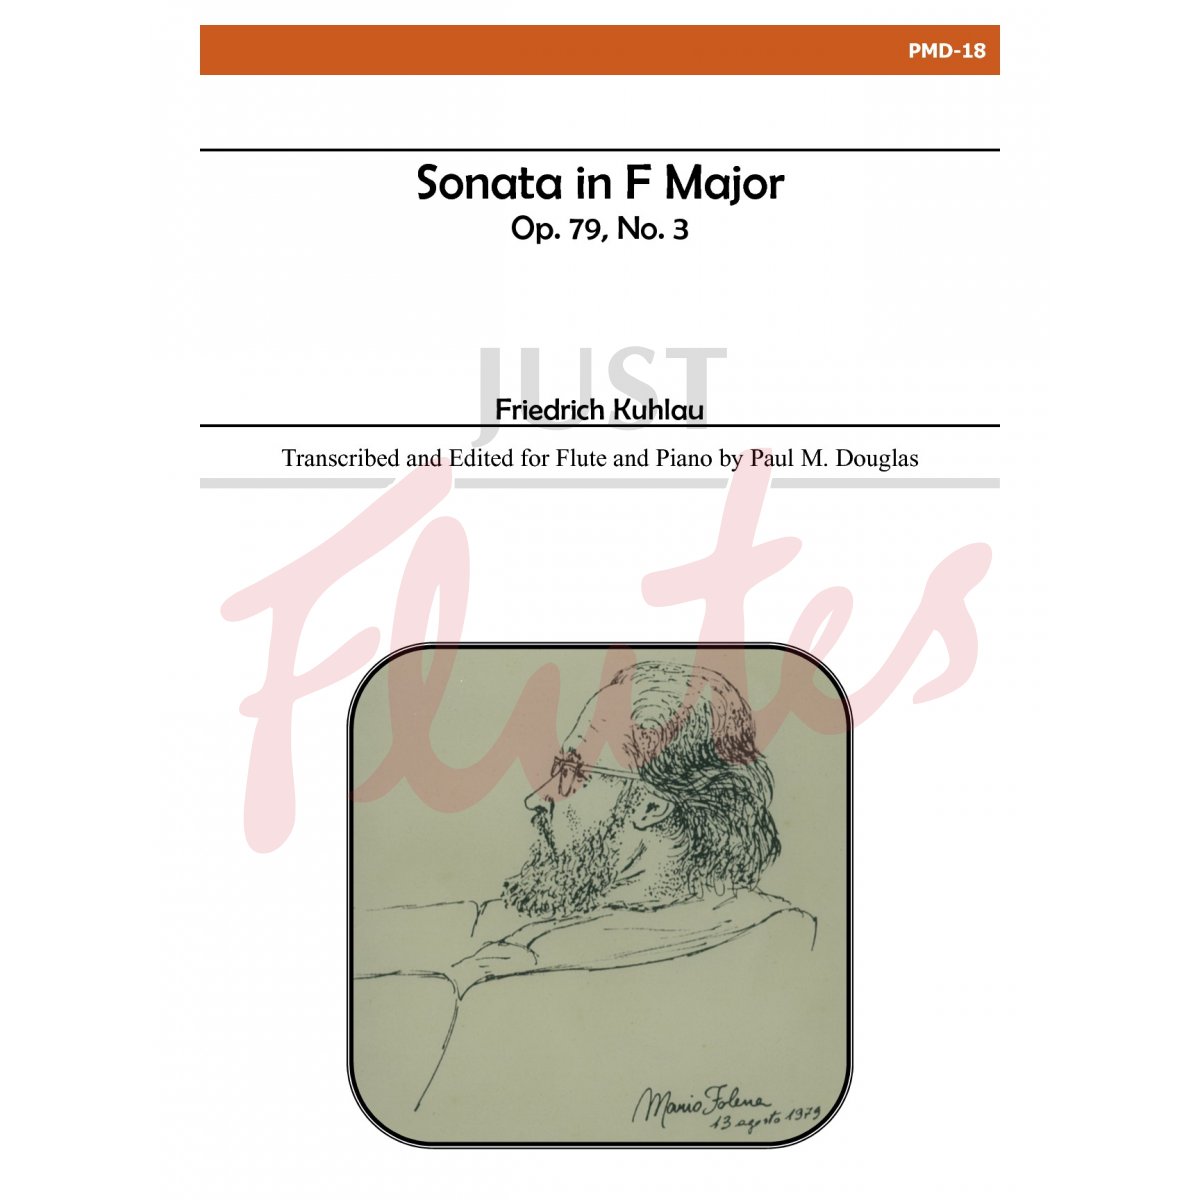 Three Sonatas, Vol. III: Sonata in F Major